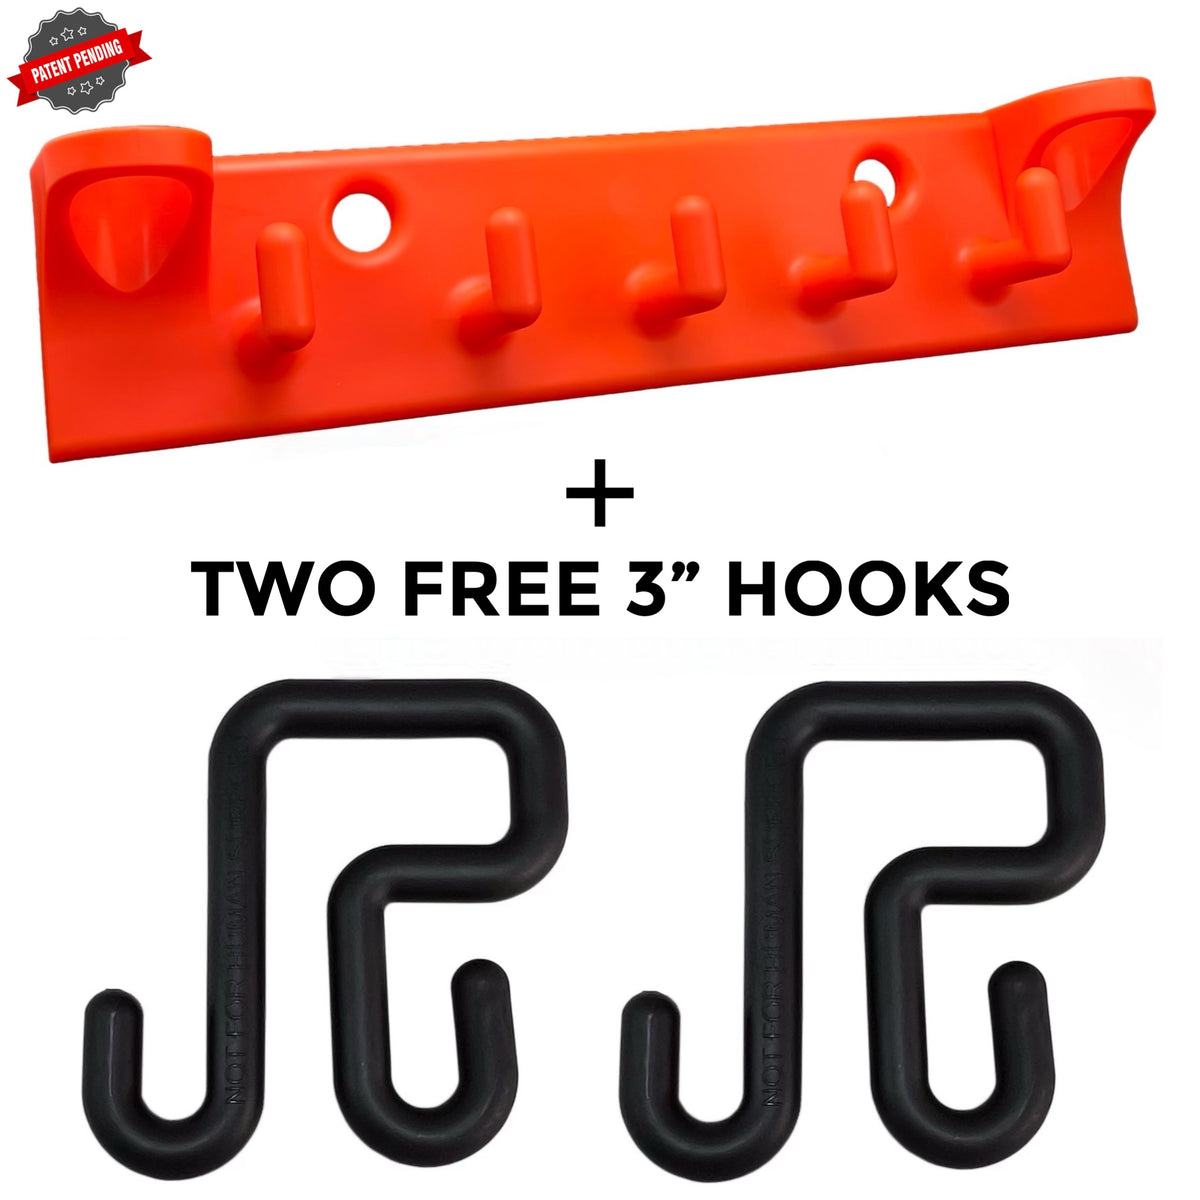 J Harlen Co. - Line Work Bucket Products - Big Rack Bucket Tool